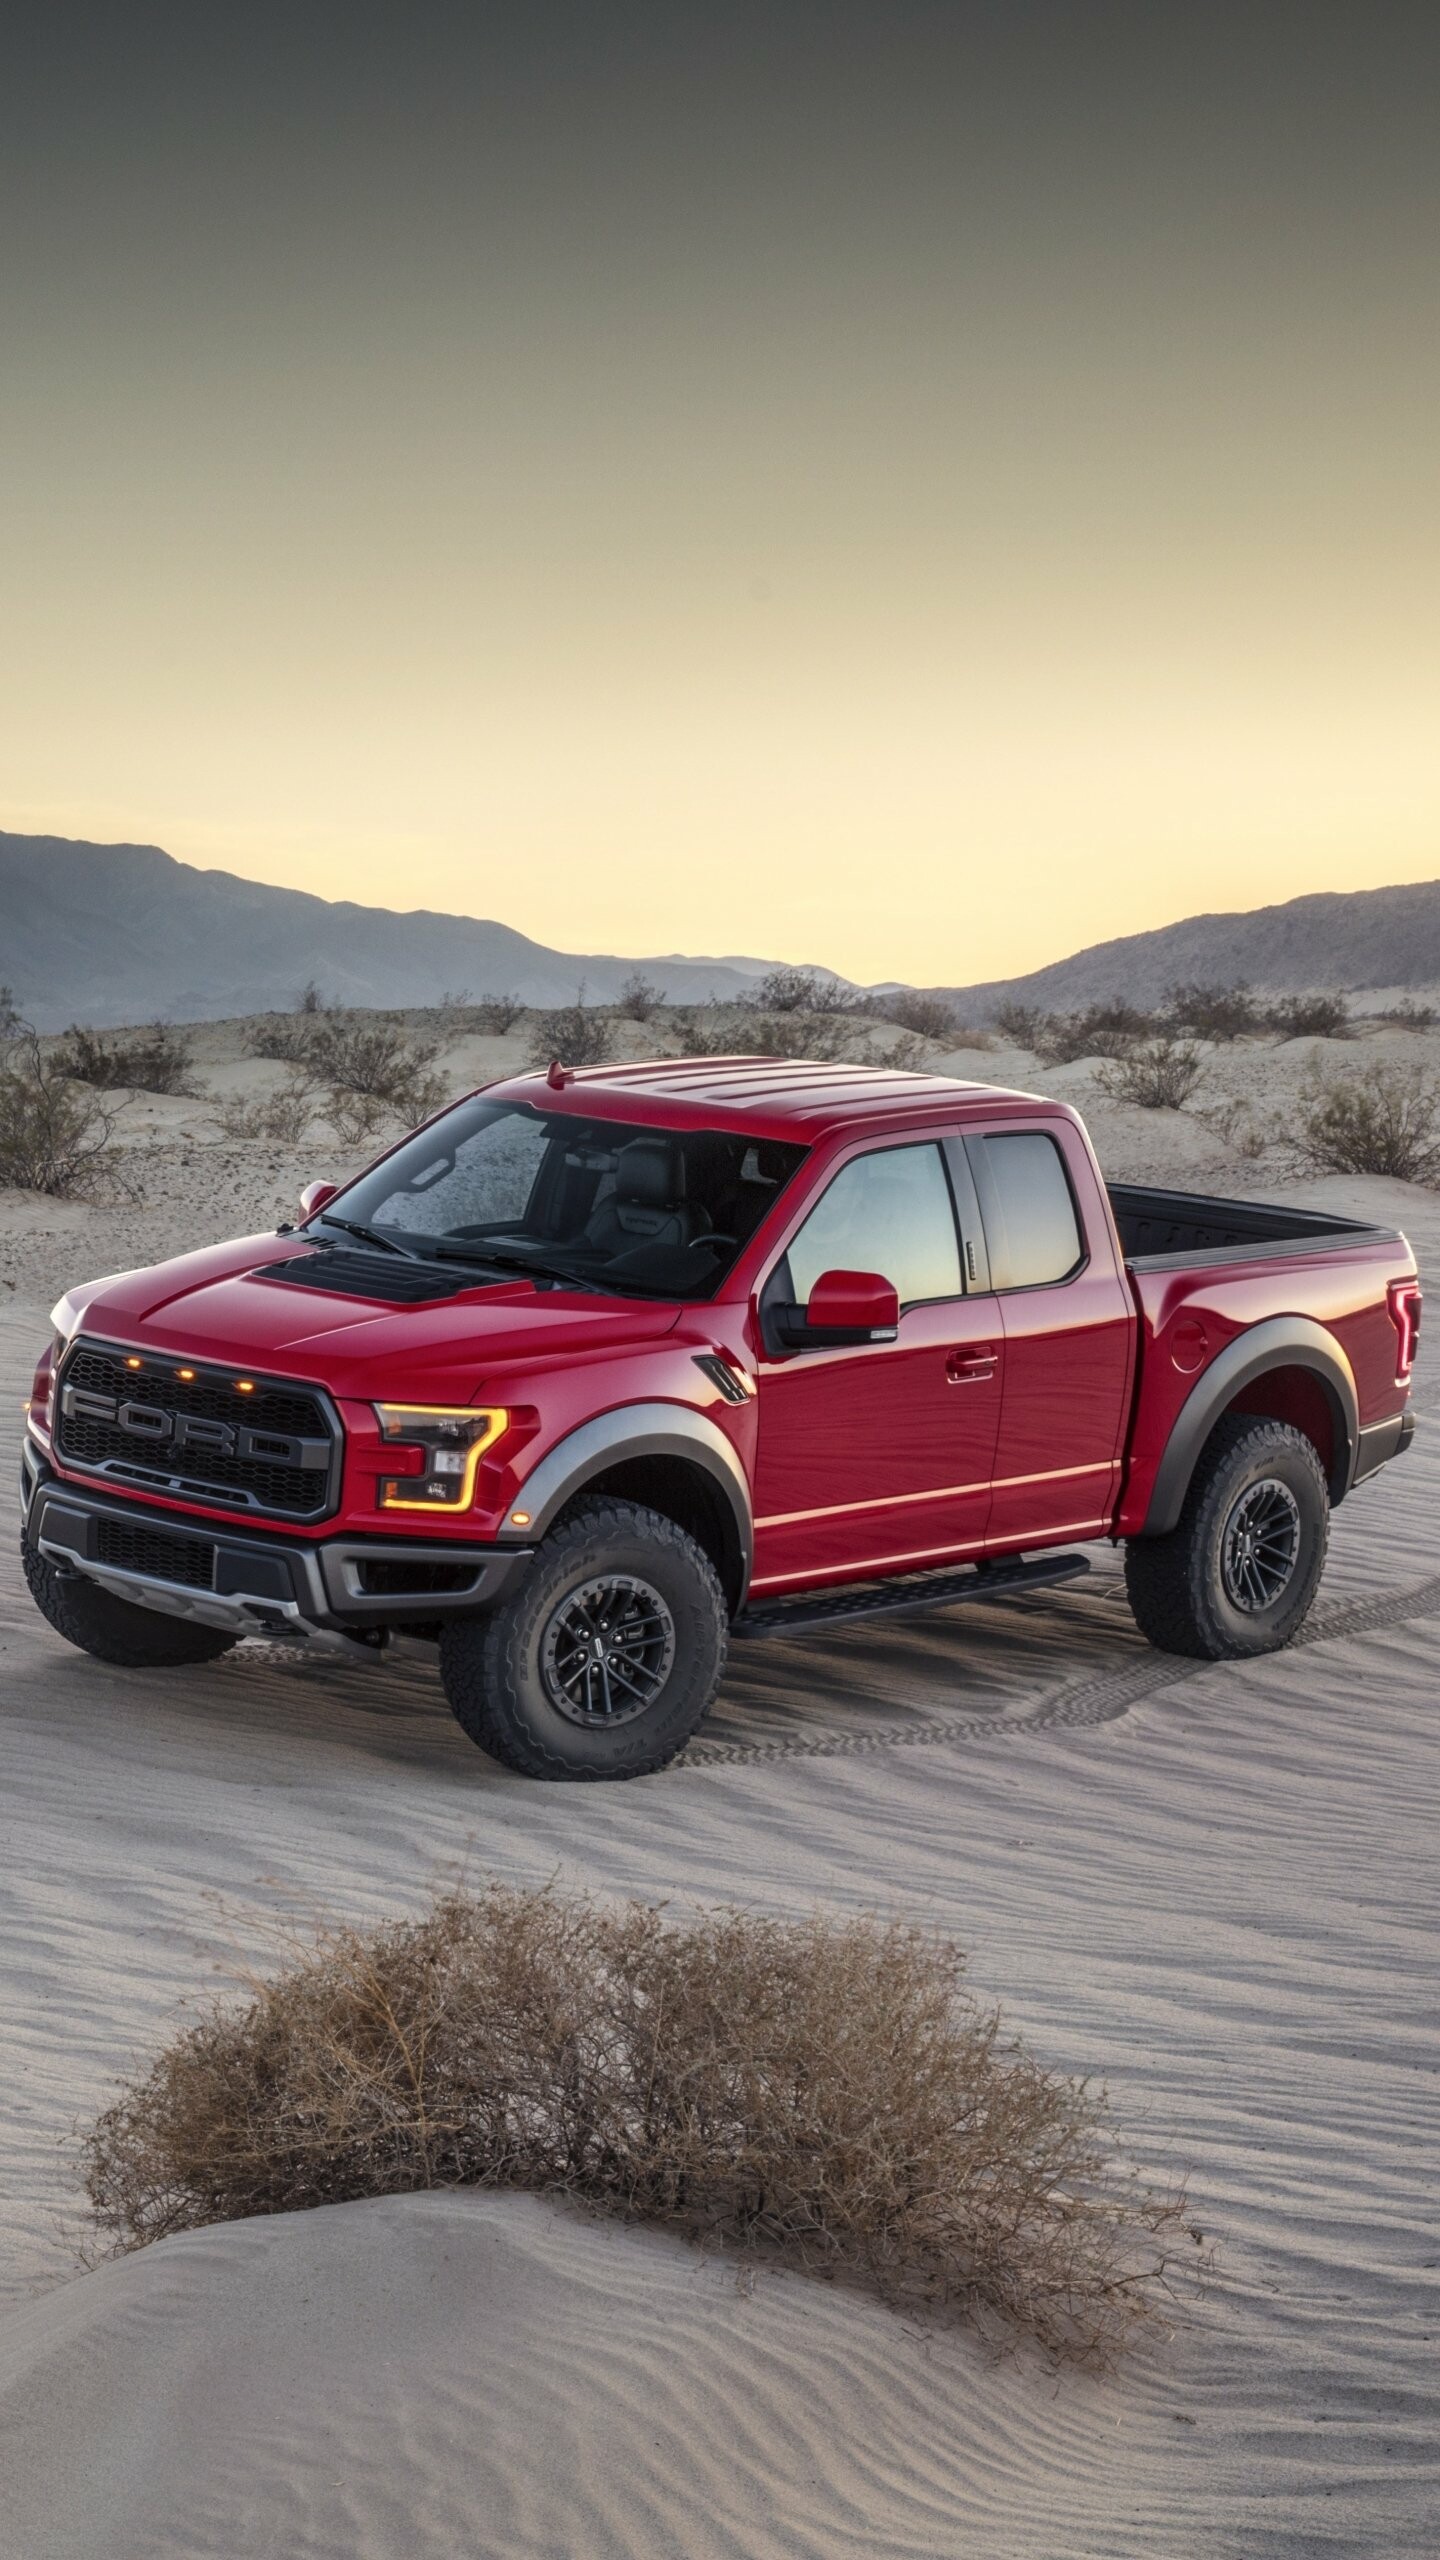 Ford: American vehicles, F-150 Raptor, "High-performance" pickup trucks and SUVs. 1440x2560 HD Wallpaper.